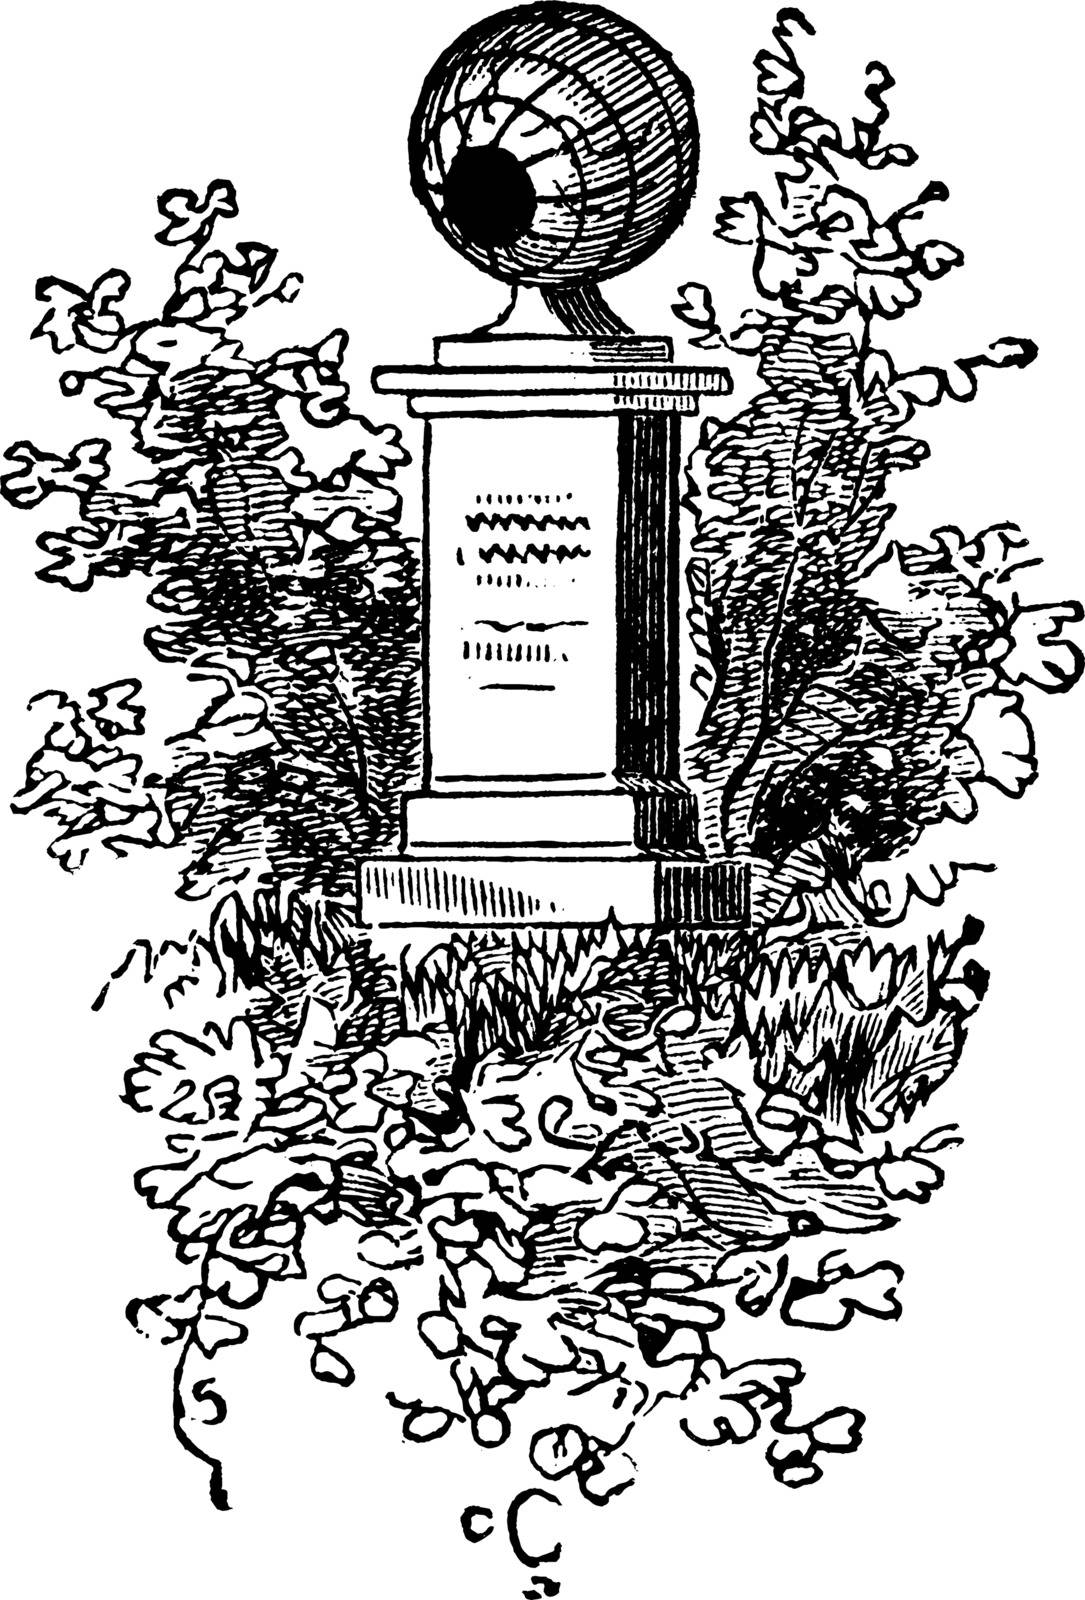 Symmes's Monument,vintage illustration by Morphart